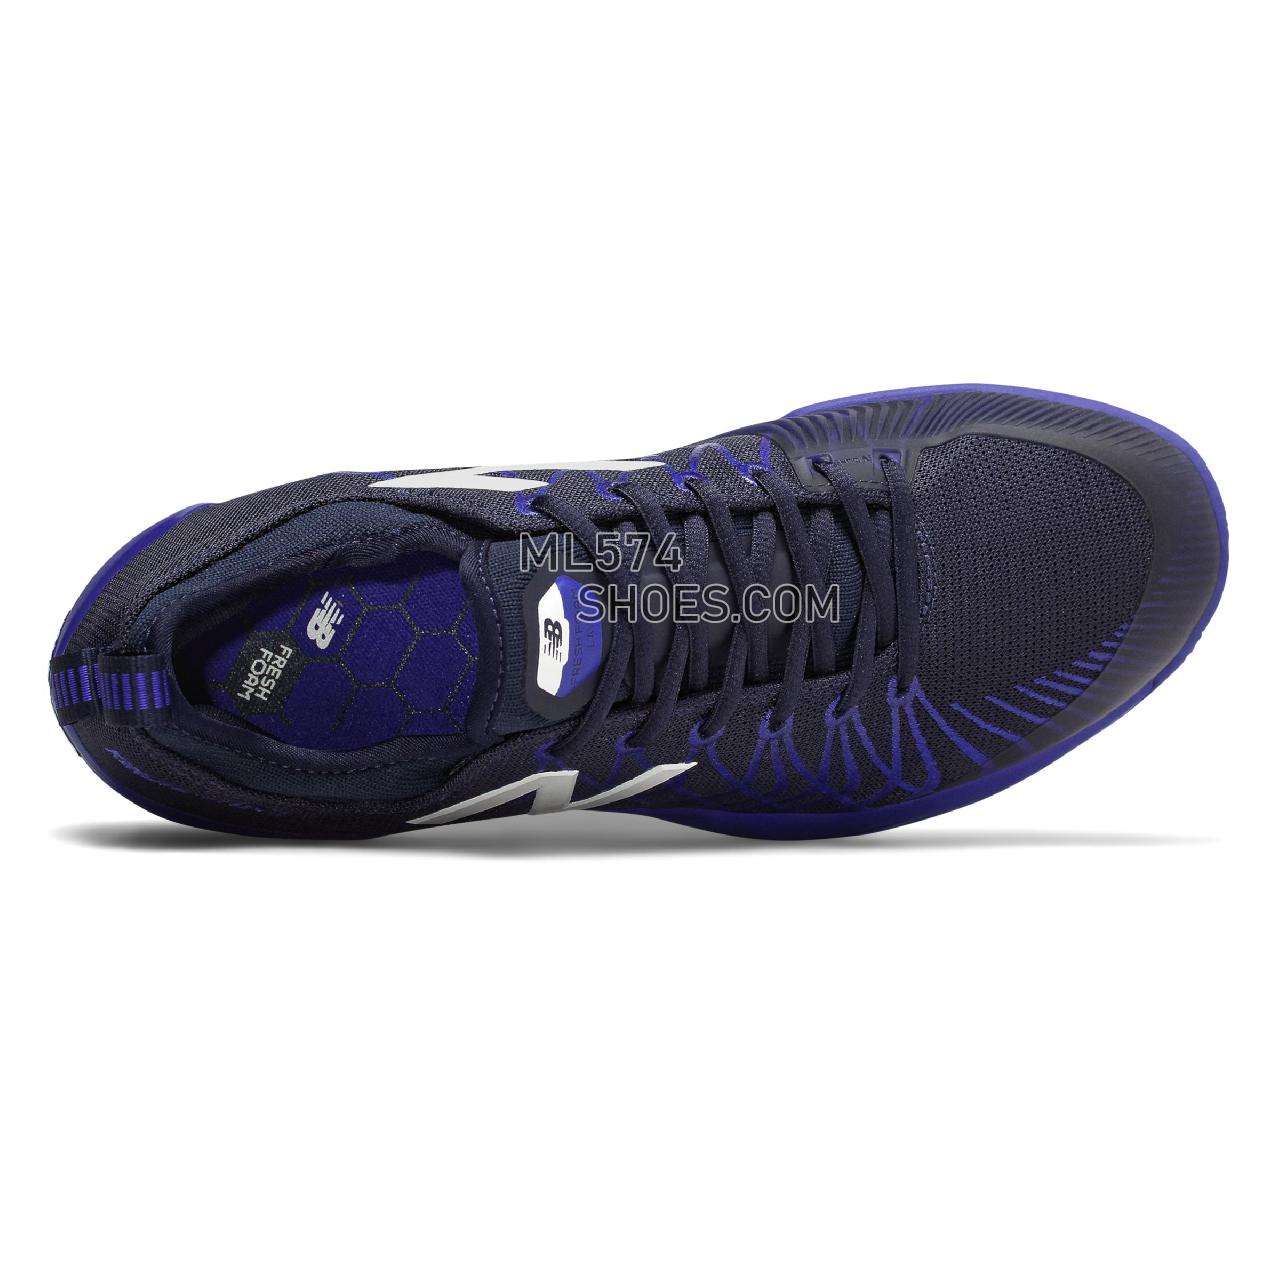 New Balance Fresh Foam Lav - Men's Tennis - Pigment with UV Blue - MCHLAVUV